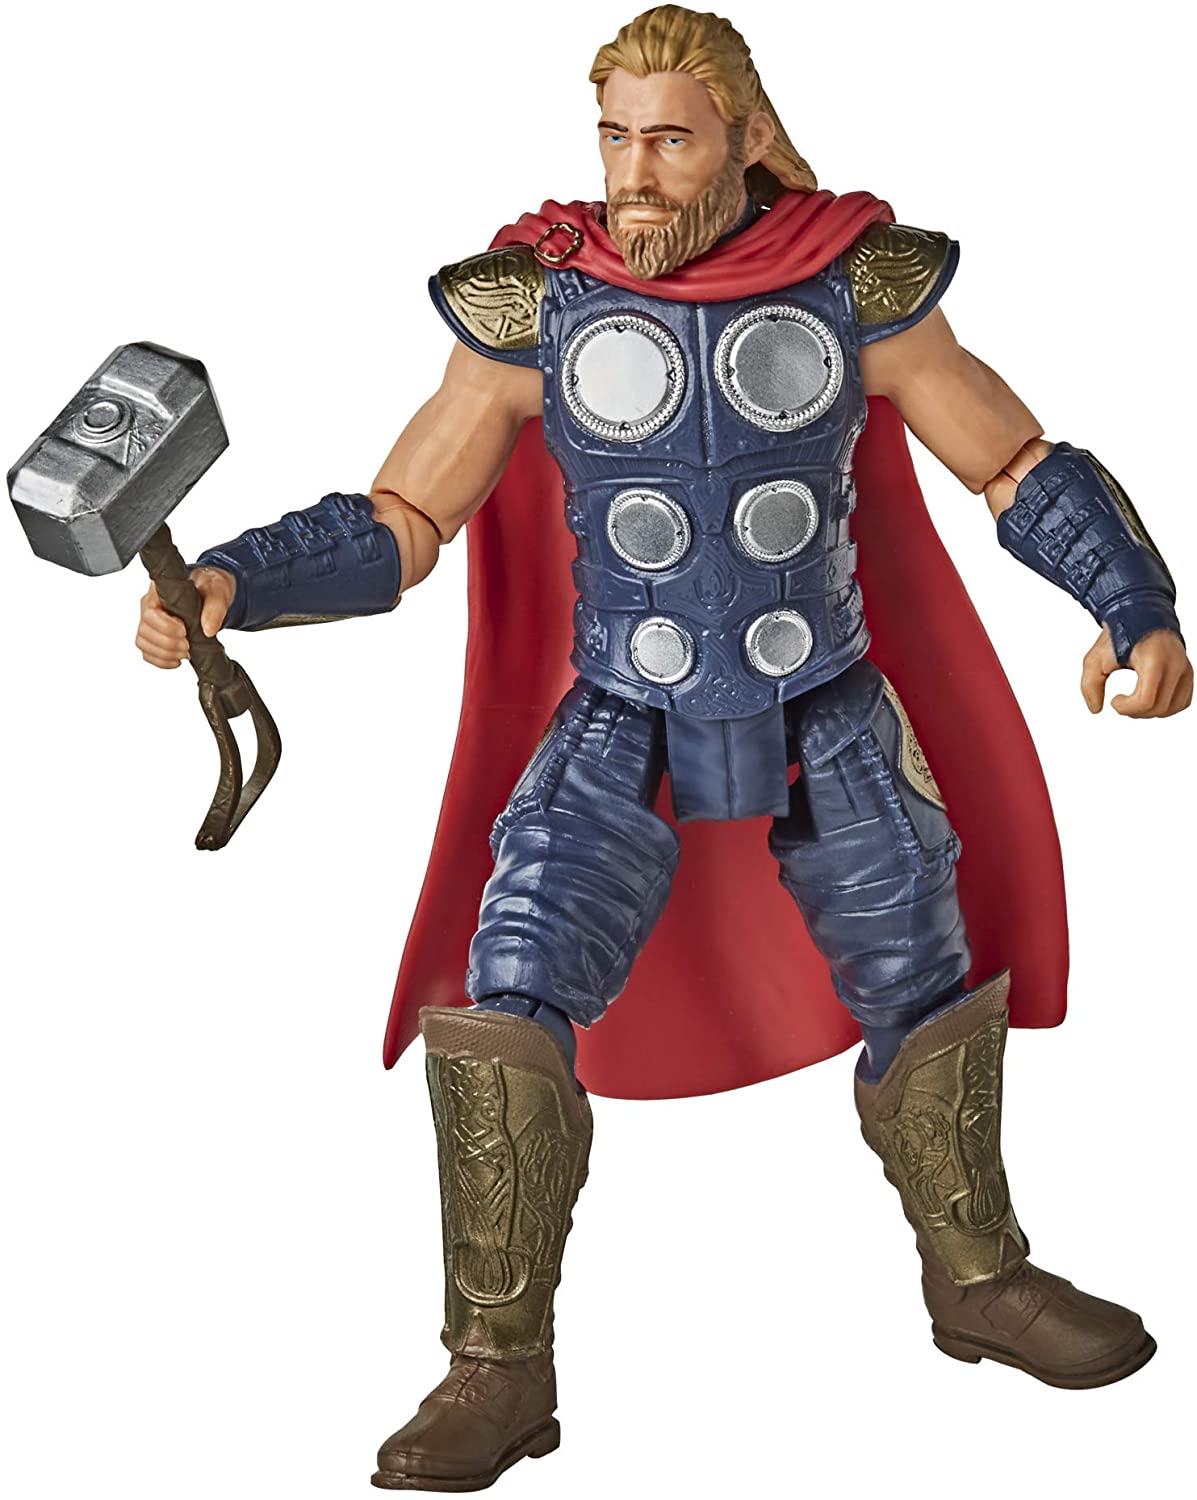 Hasbro Marvel Avengers Gamerverse 6-inch Action Figure Toys Assortment: Thor, Ms. Marvel, Iron Man, Captain America